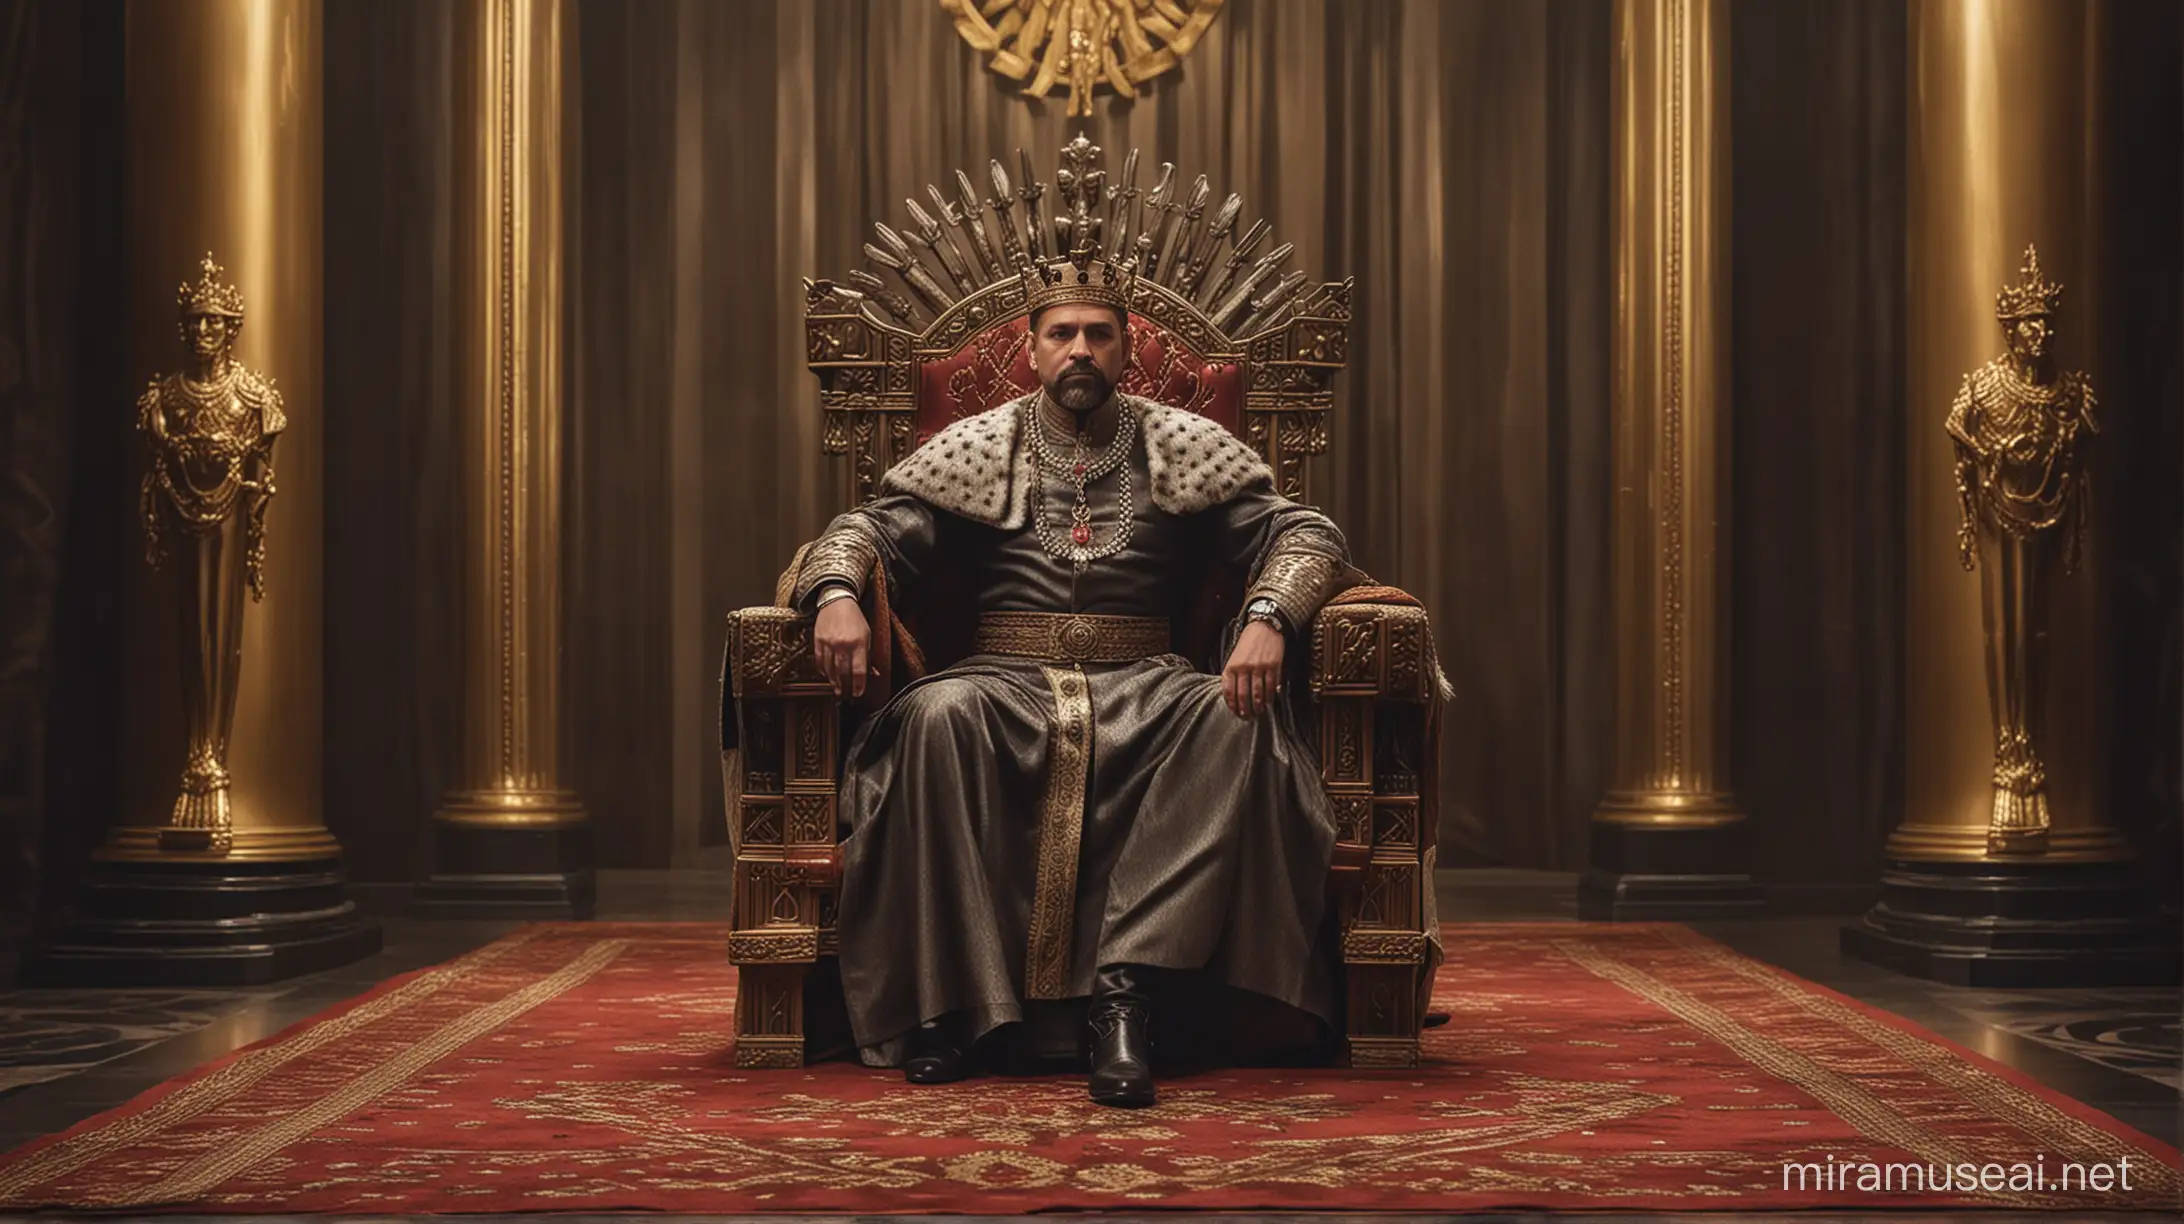 King Sitting on the Modern throne